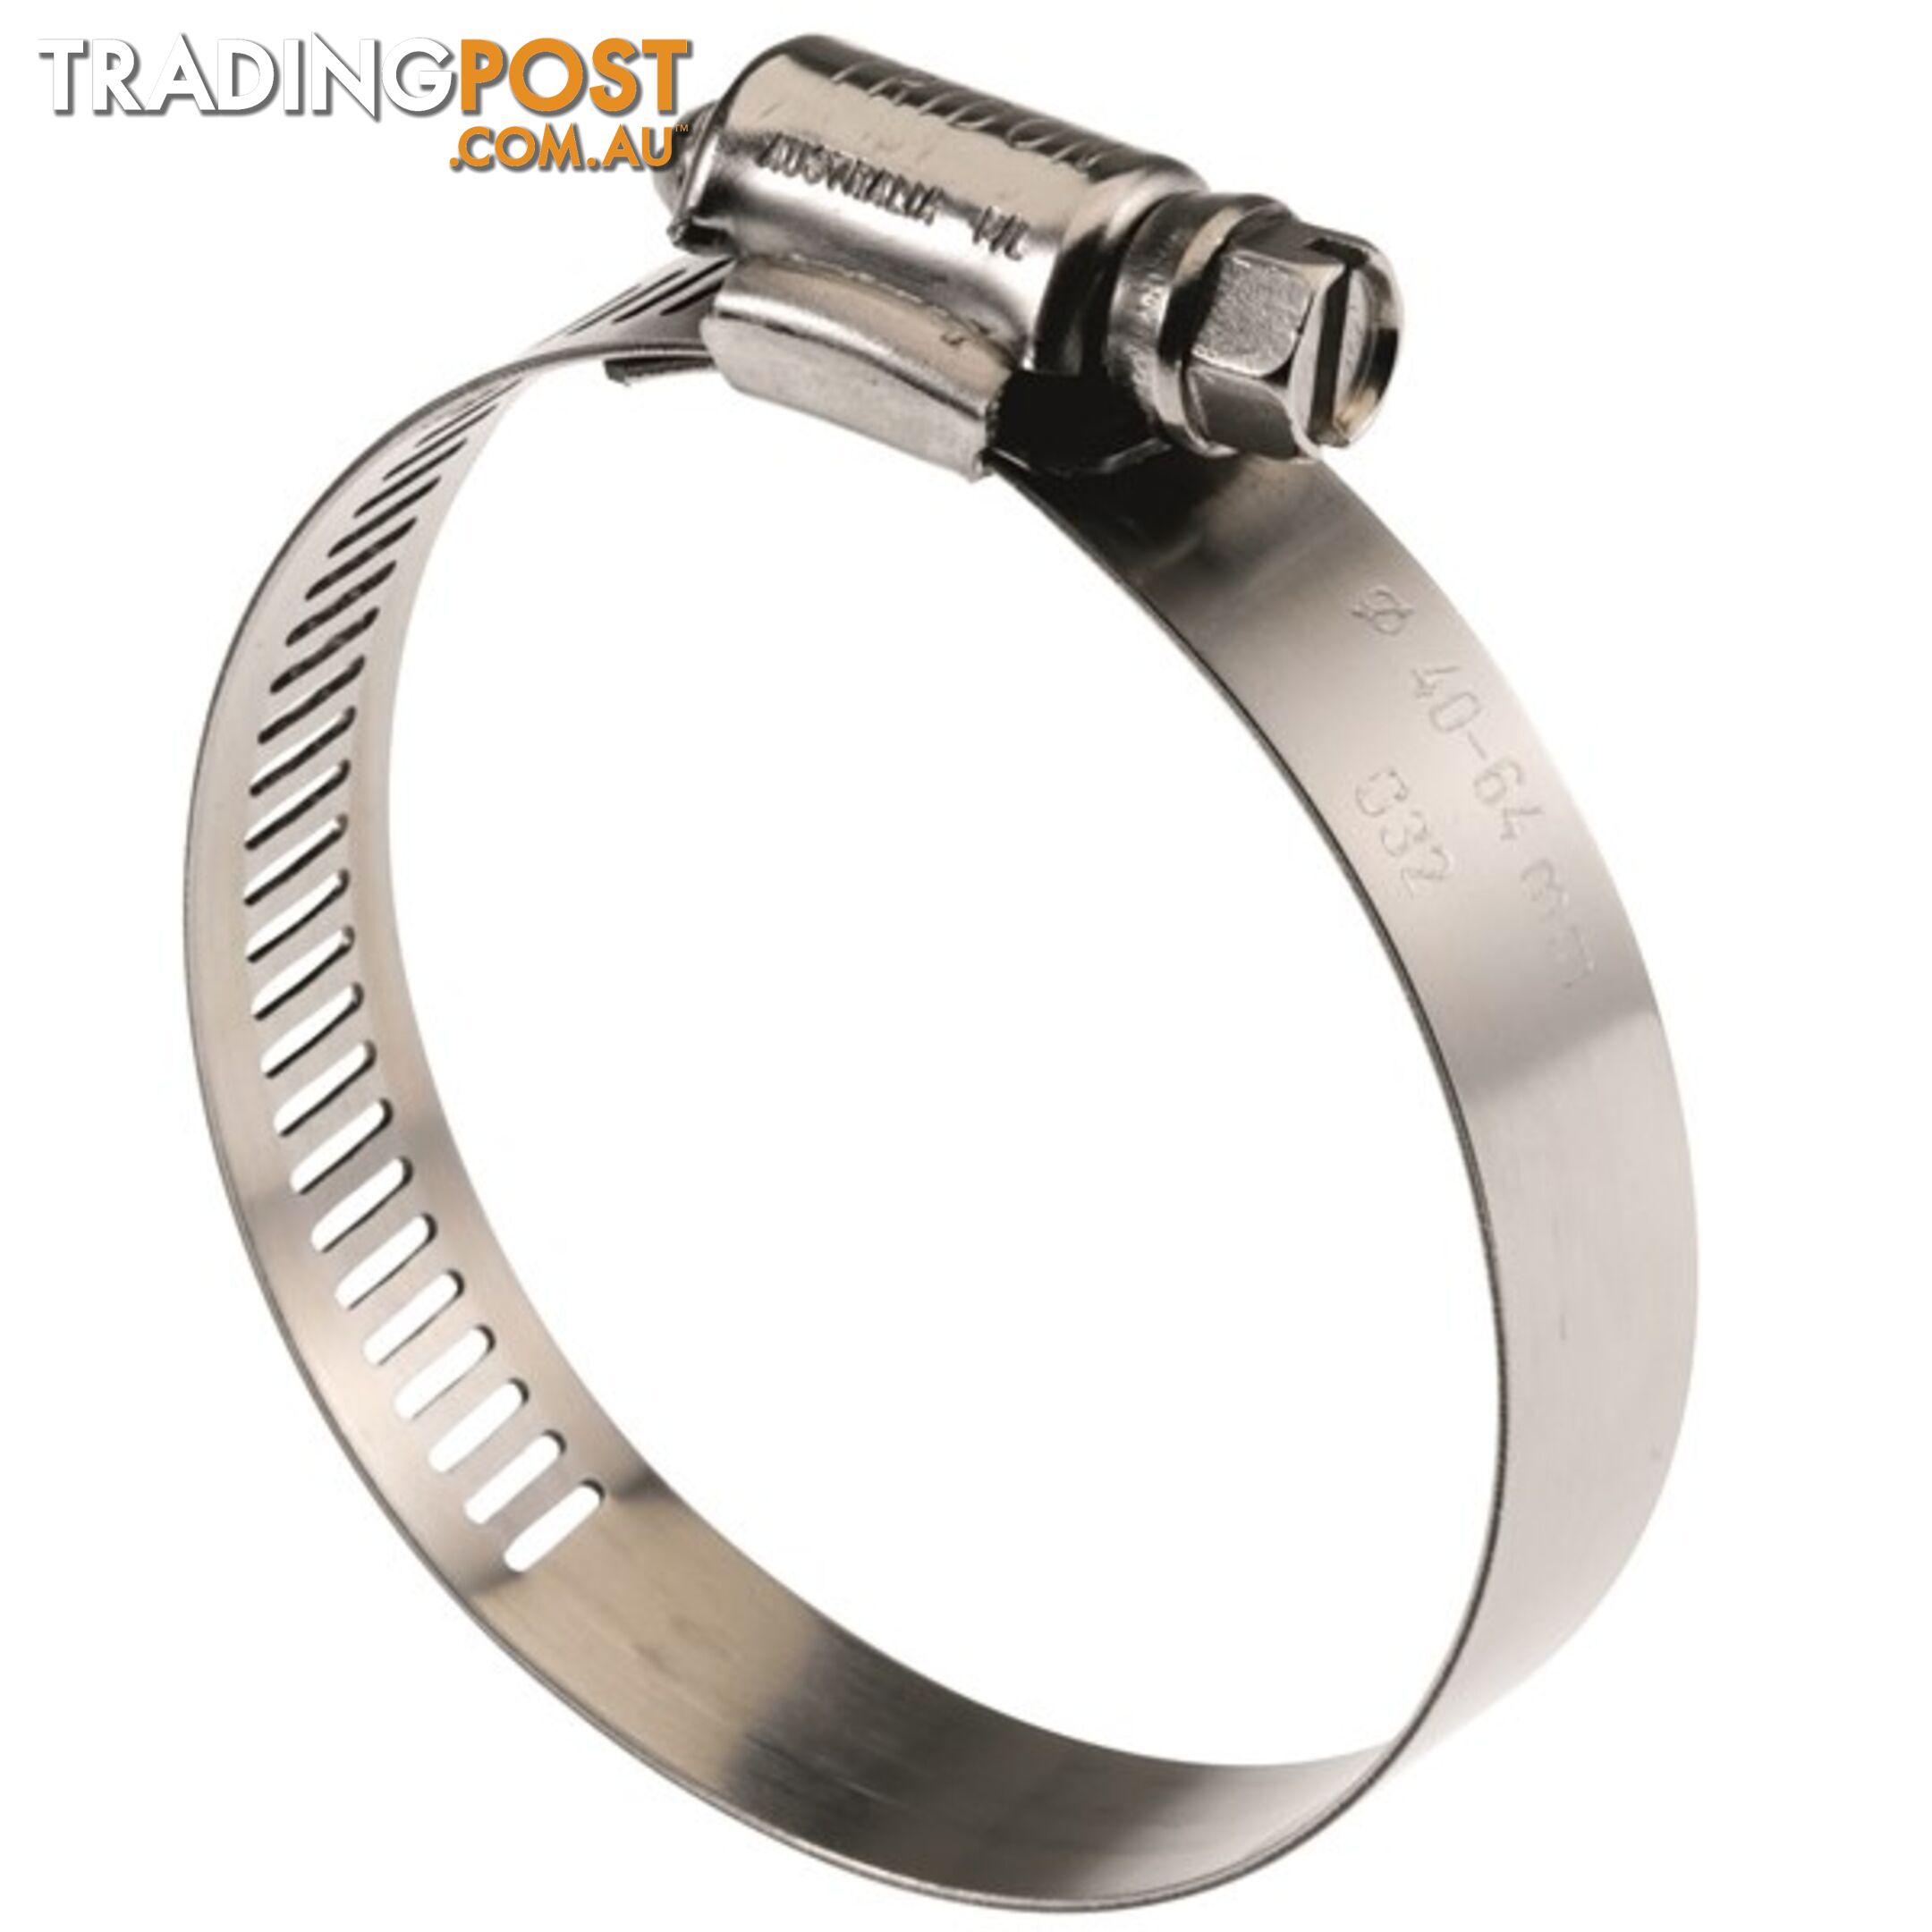 Tridon Full S. Steel Hose Clamps 21mm â38mm Perforated Band 10pk SKU - HAS016P